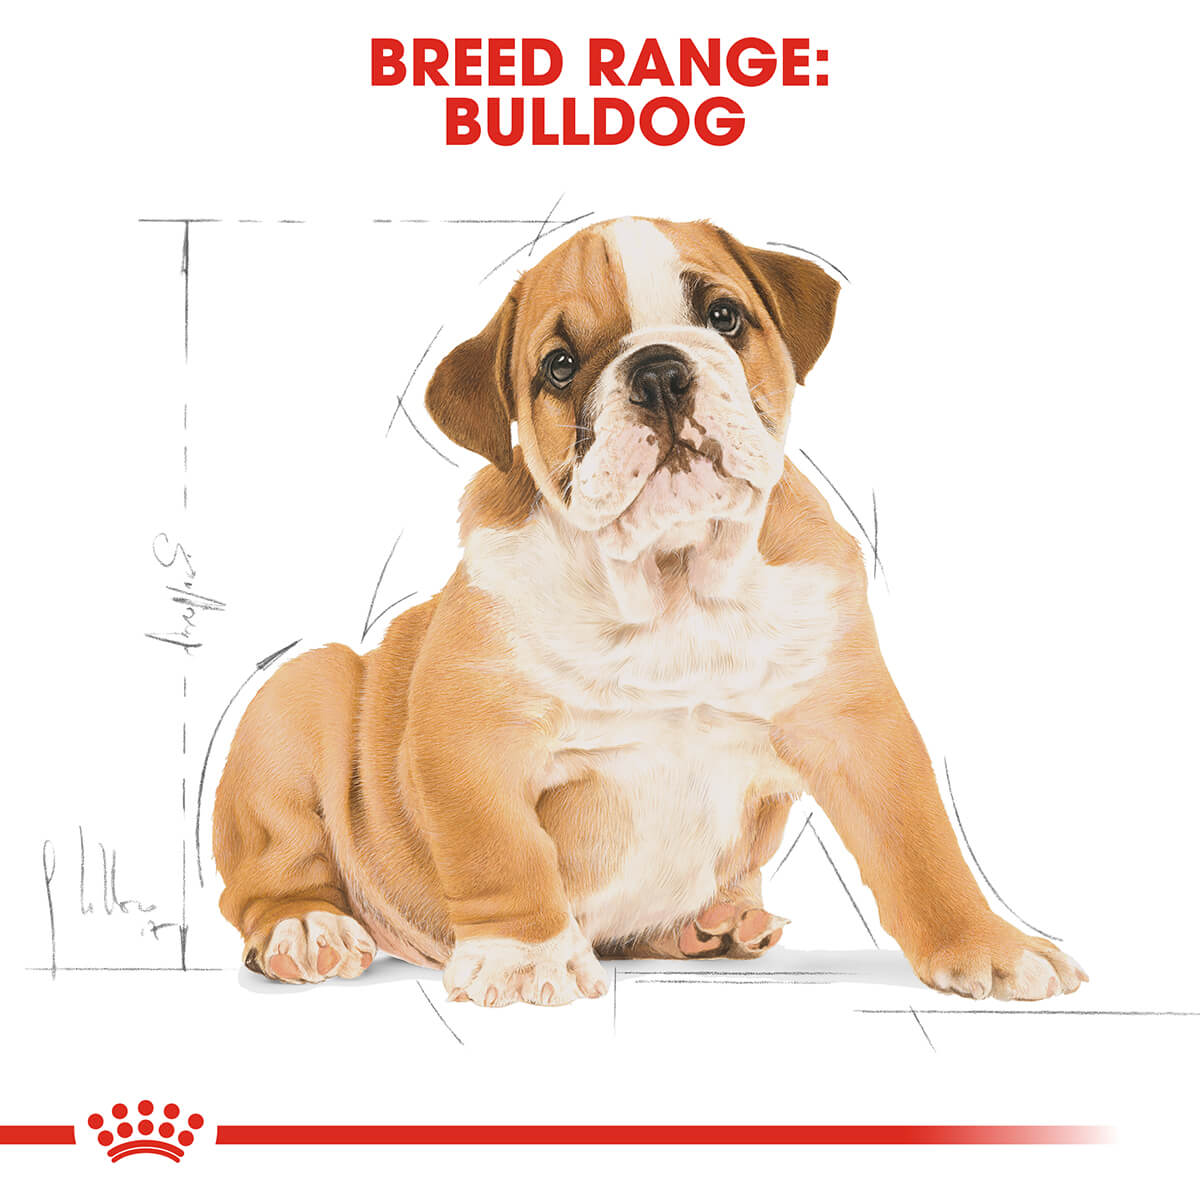 Royal Canin Bulldog Puppy Dry Dog Food 12kg (100000005439) [default_color]